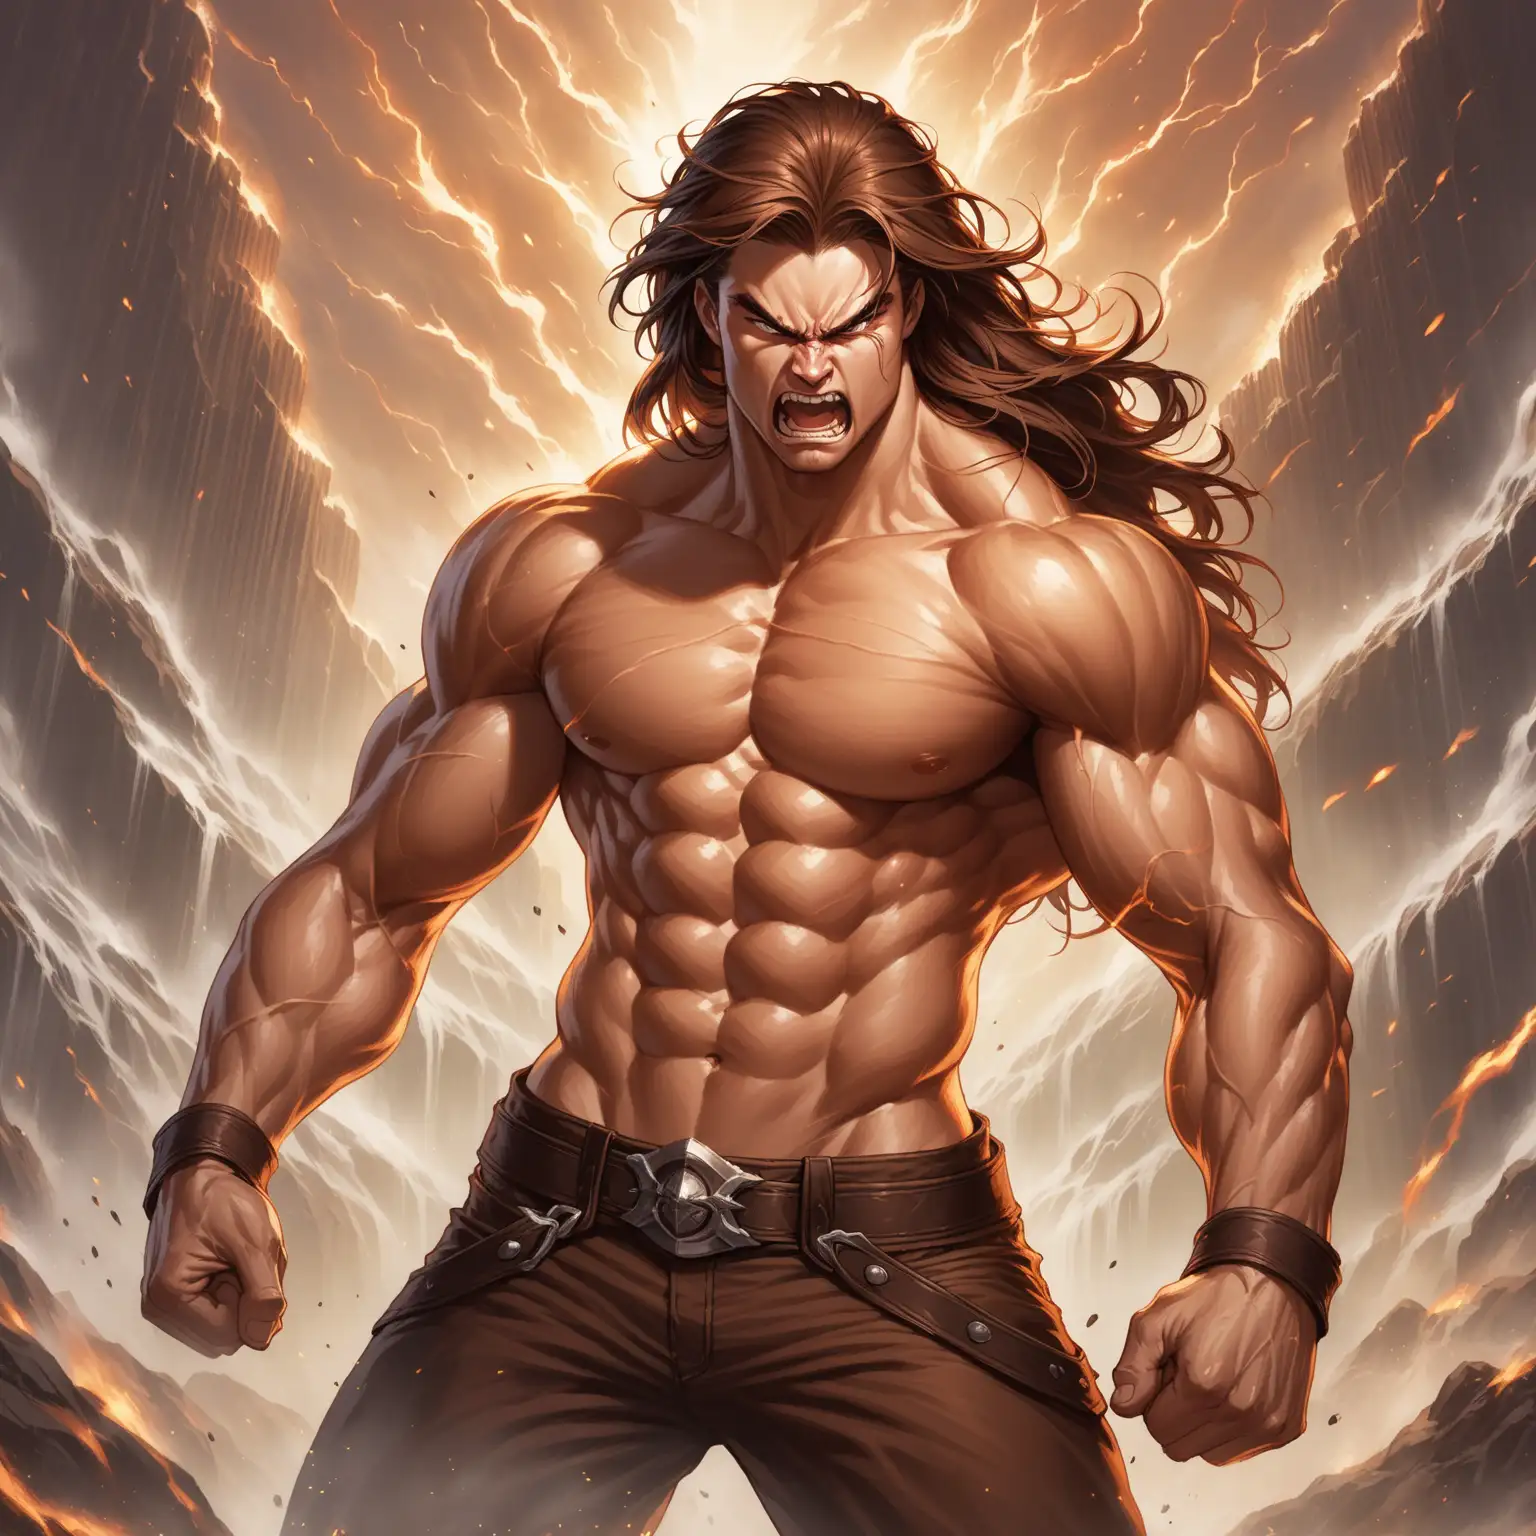 Furious Muscular Young Man with Long Brown Hair Fantasy Art